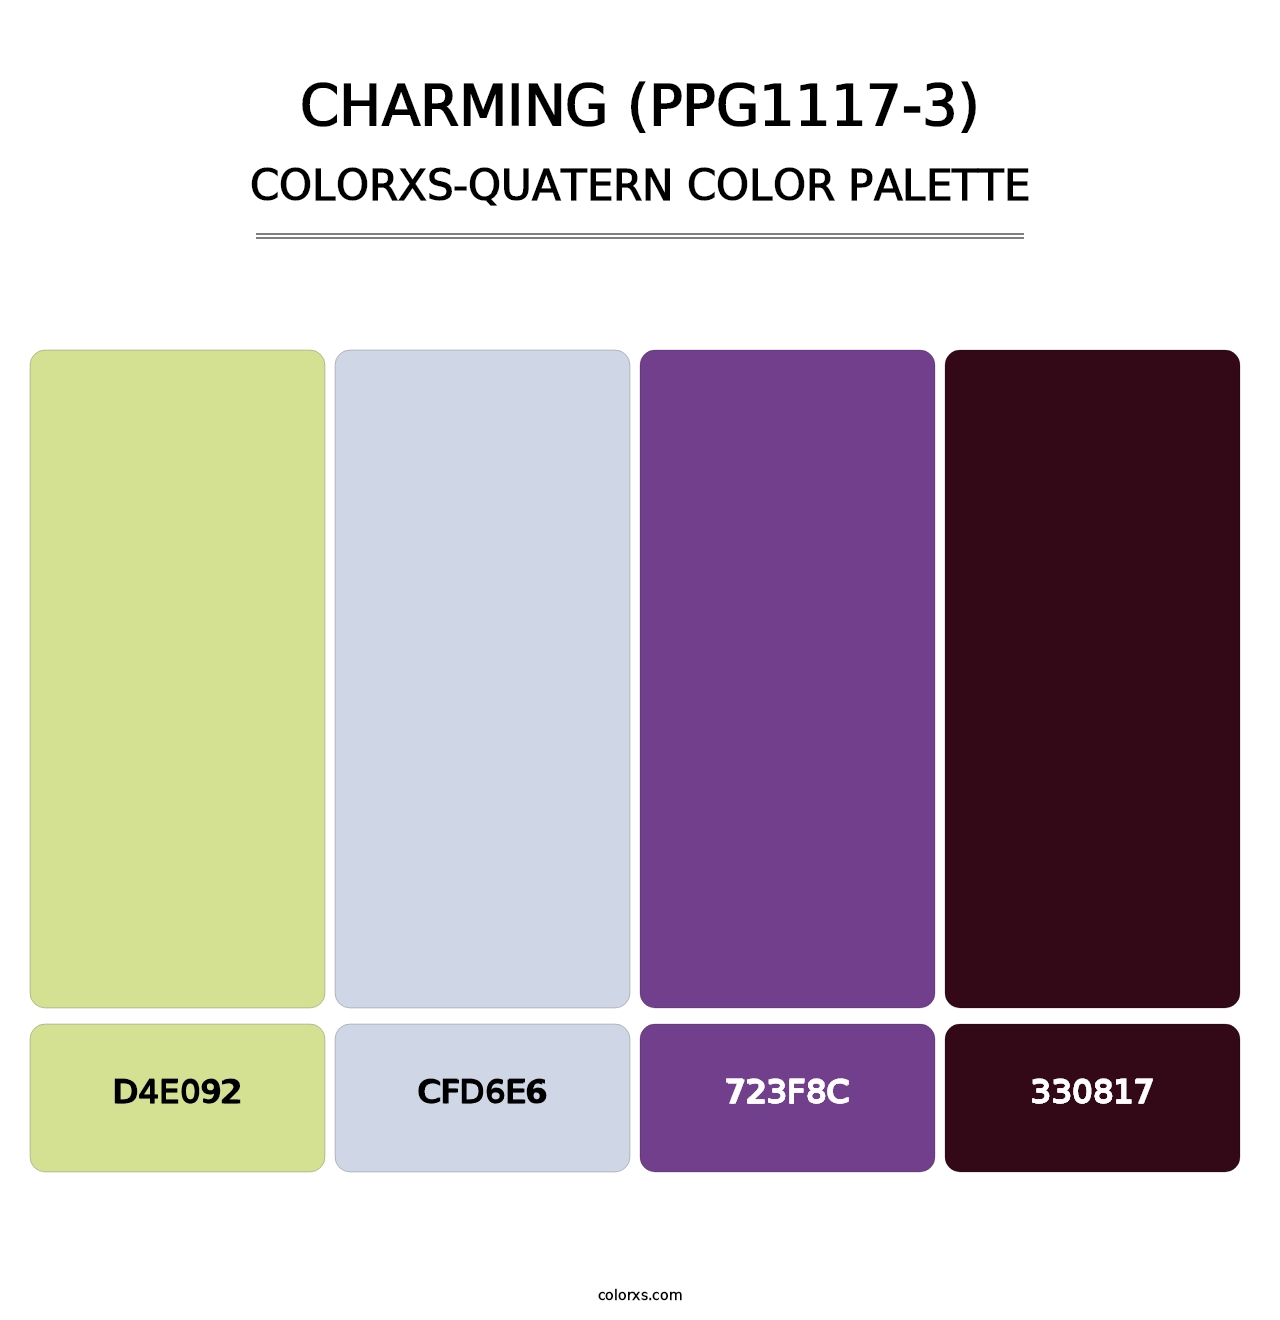 Charming (PPG1117-3) - Colorxs Quatern Palette